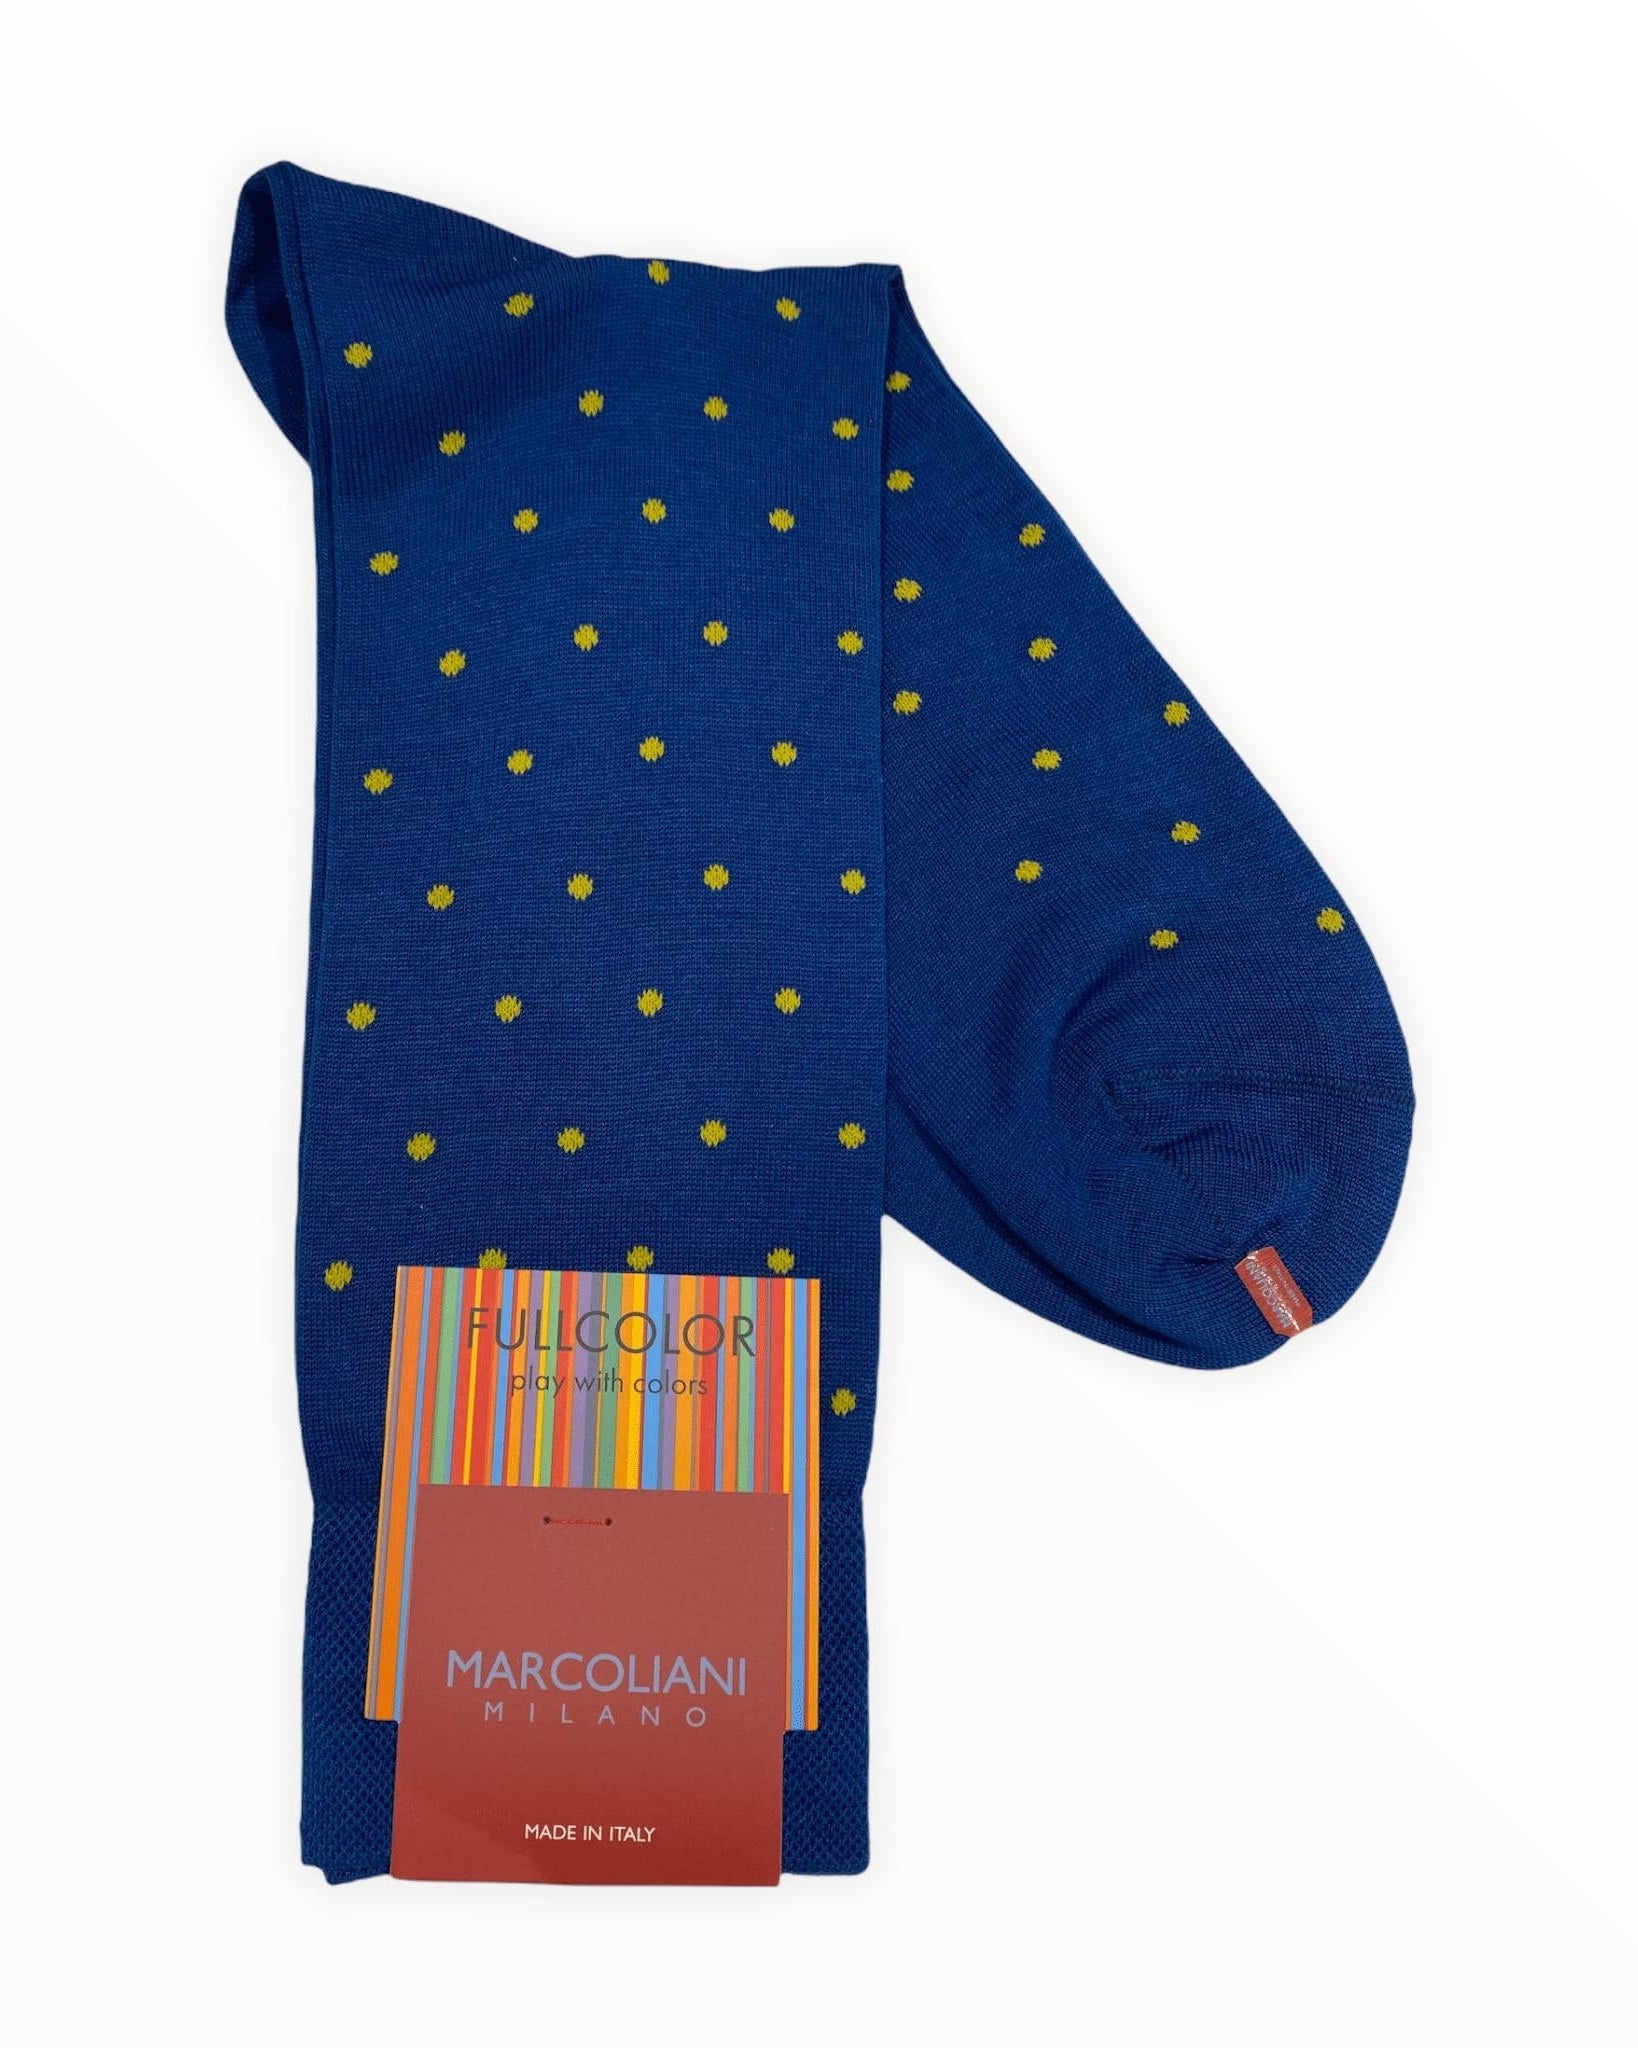 Marcoliani Men's Socks Blue/Yellow Marcoliani Polka Dot Cotton Socks Mid Calf